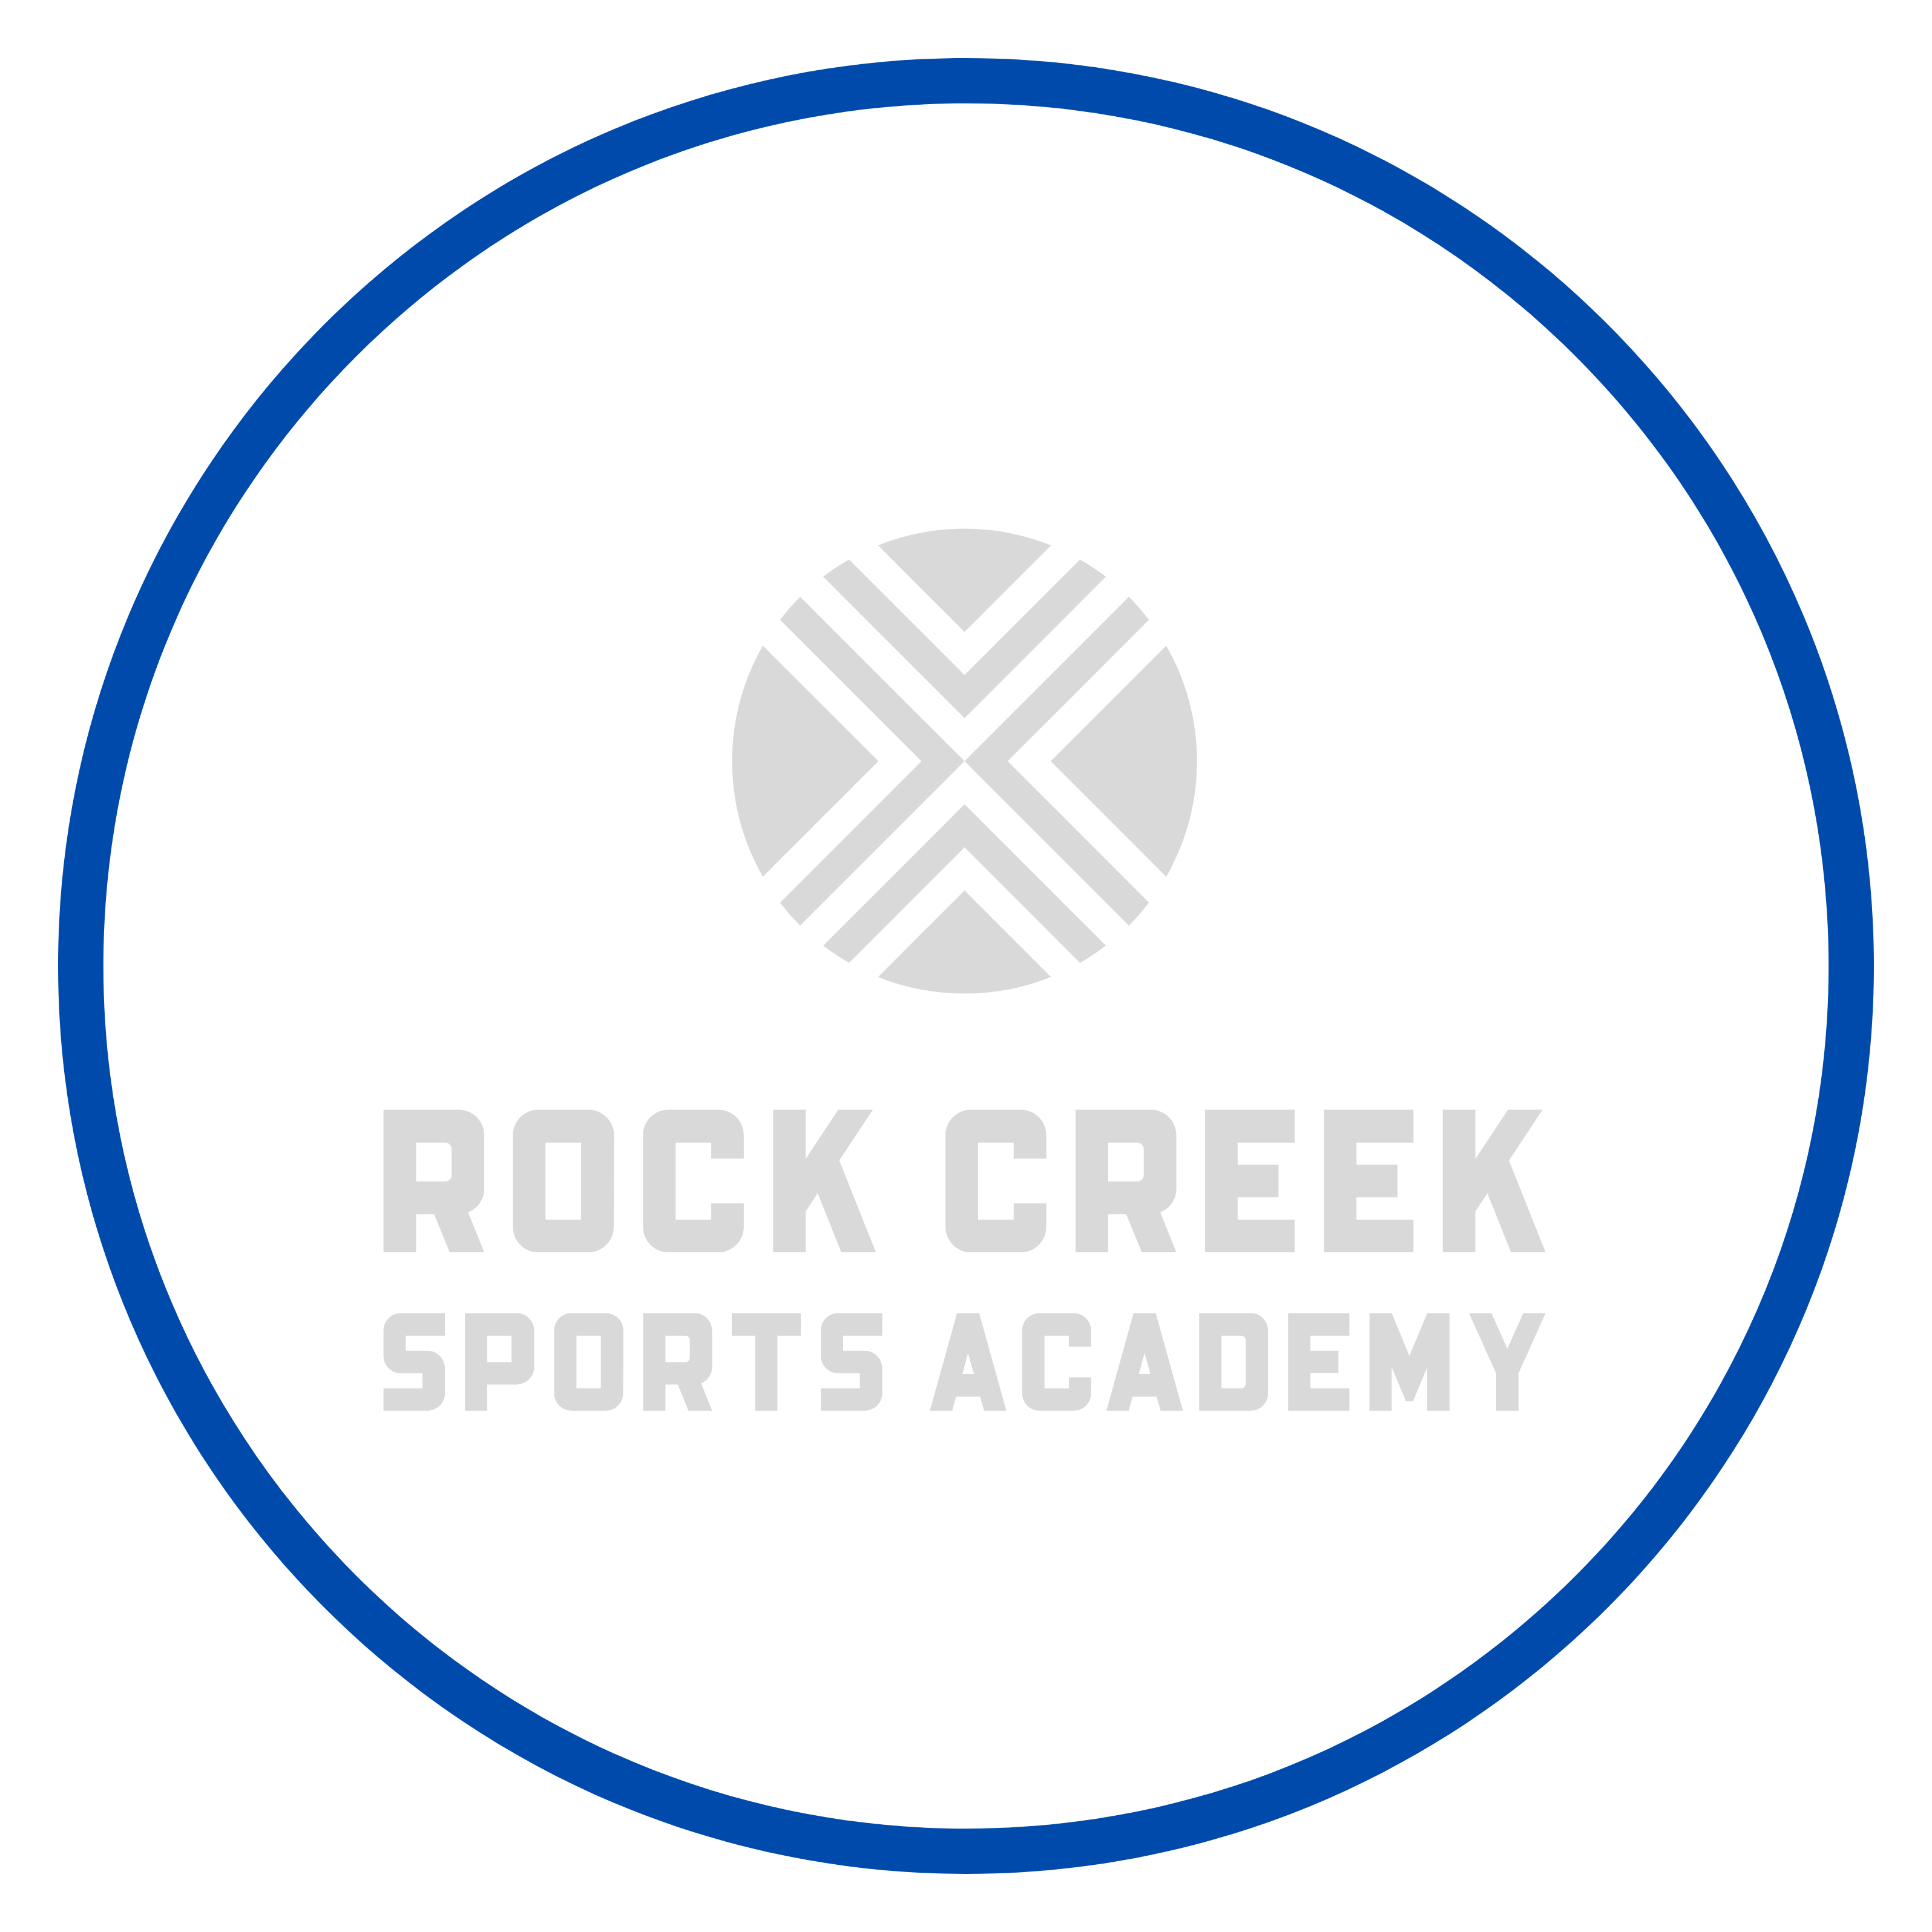 Sports Academy Logo Design | The Dots